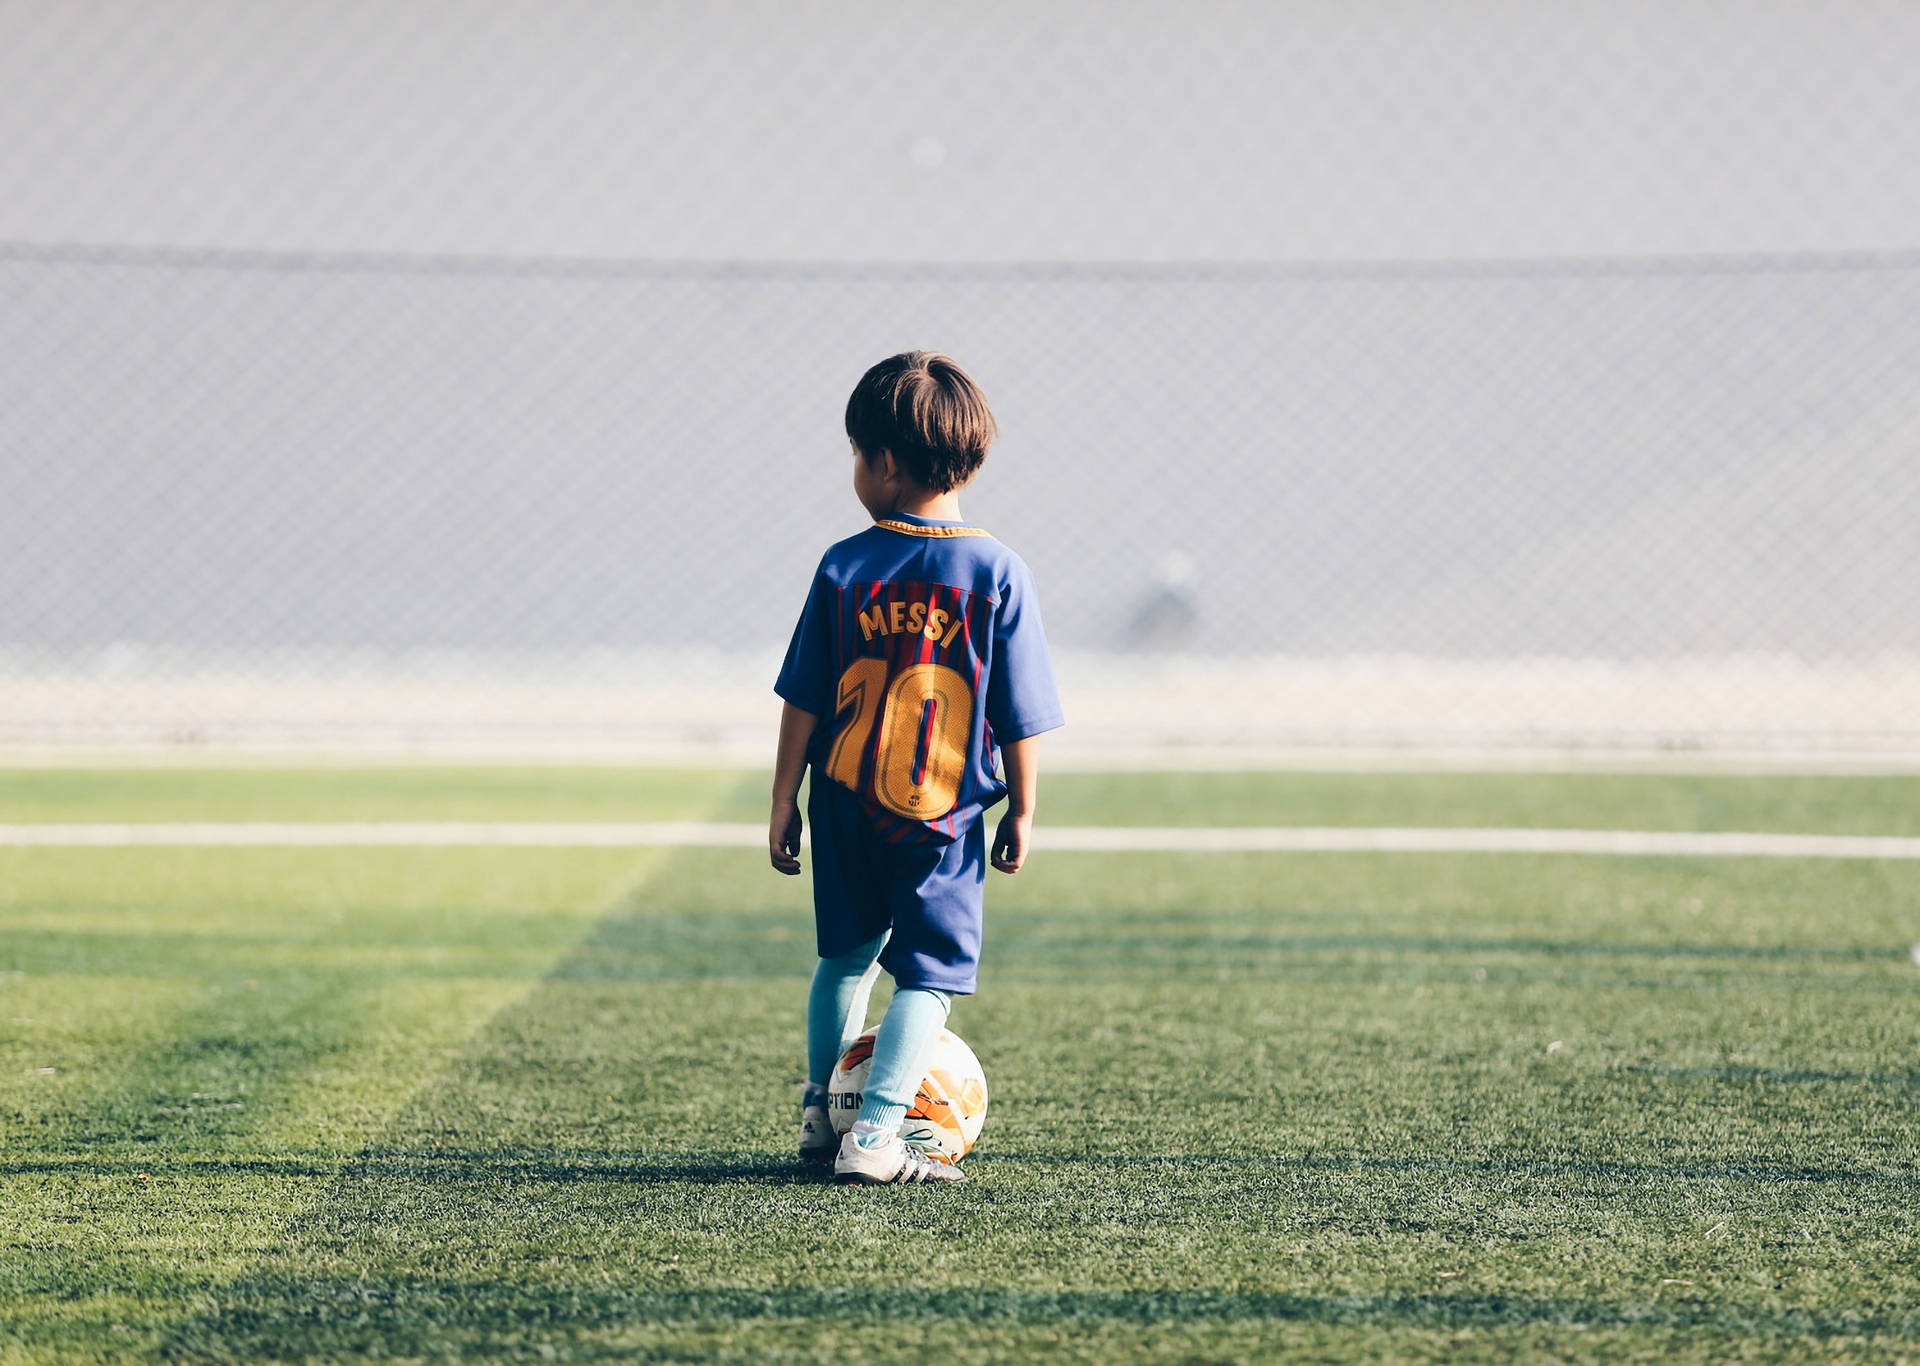 Child Football Messi Jersey